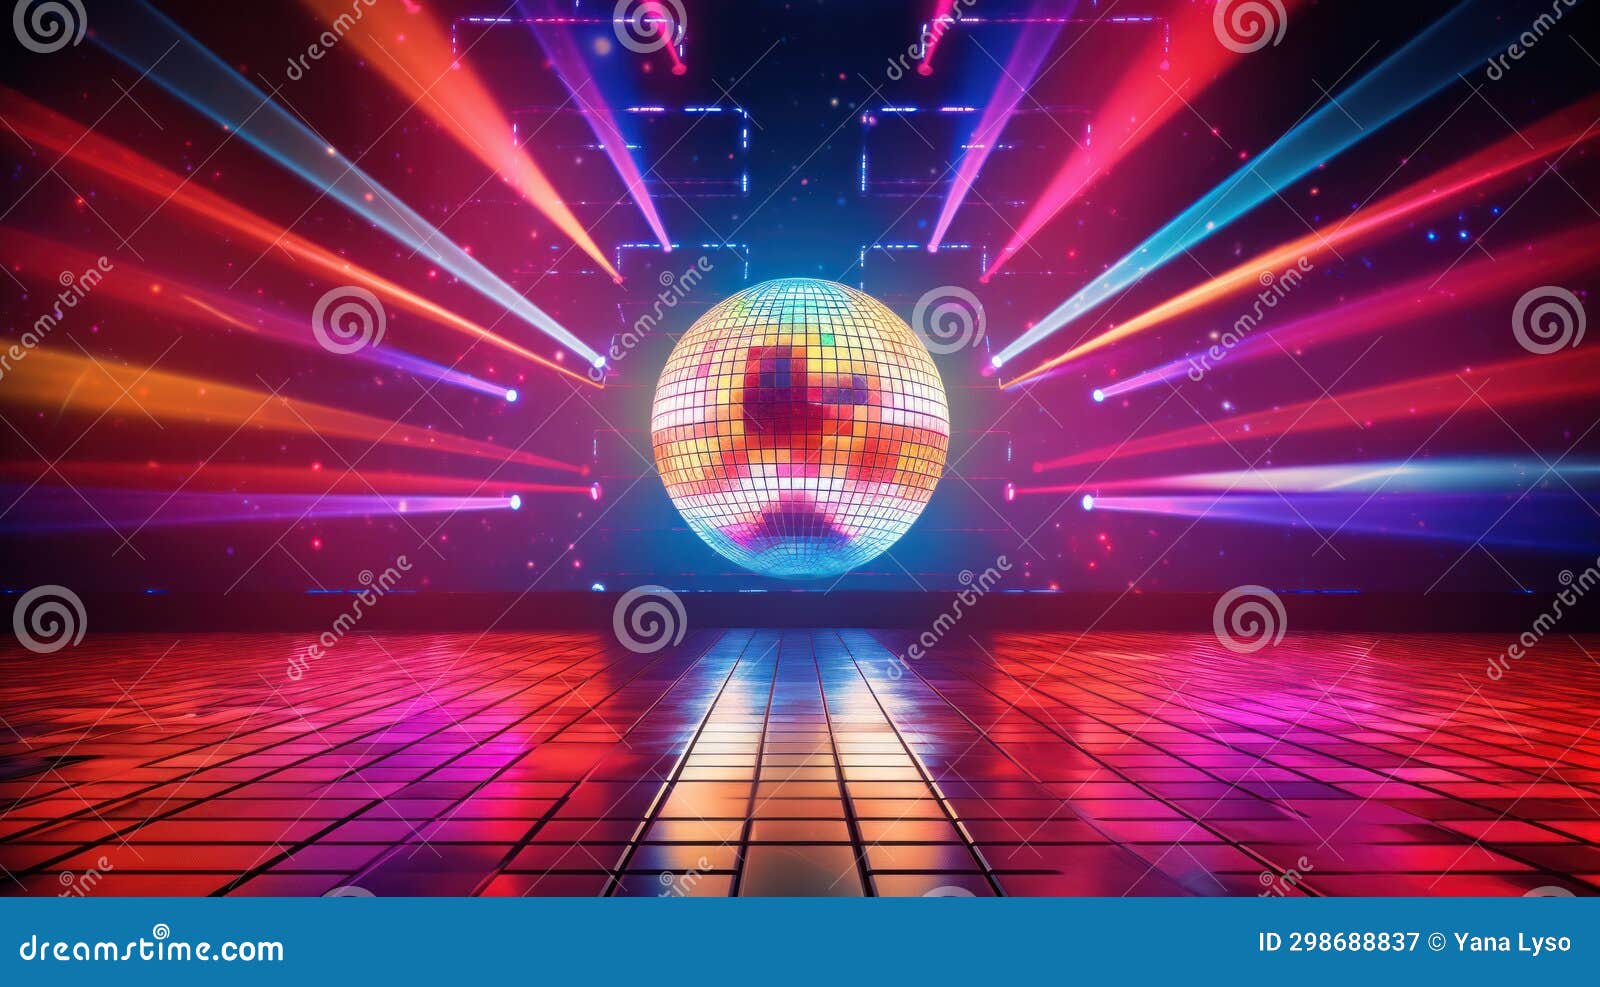 Vibrant nightclub with modern decoration, disco ball and multi